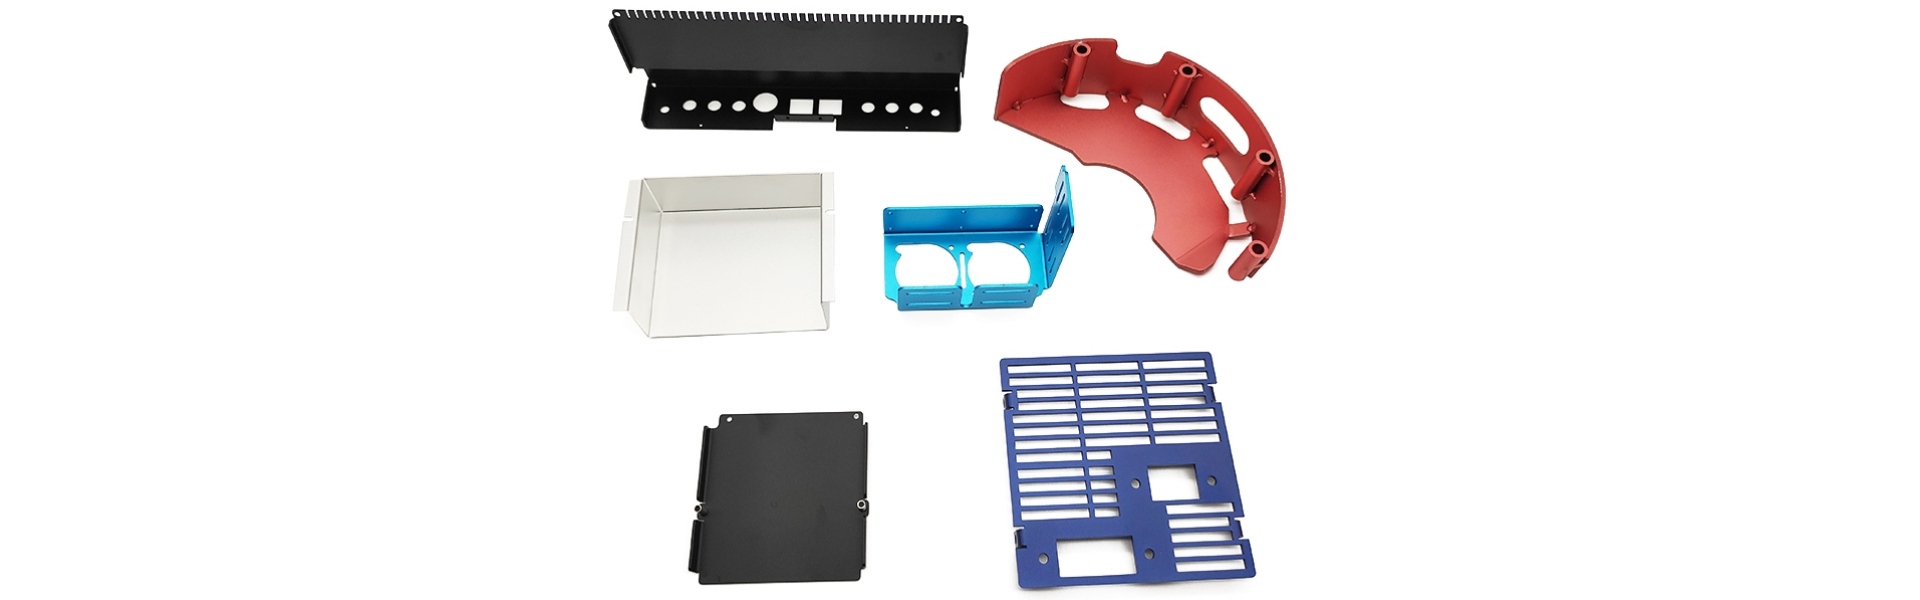 sheet metal fabrication,metal stamping parts ,cnc machining service,Xucheng Precision Sheet metal Products Co., LTD